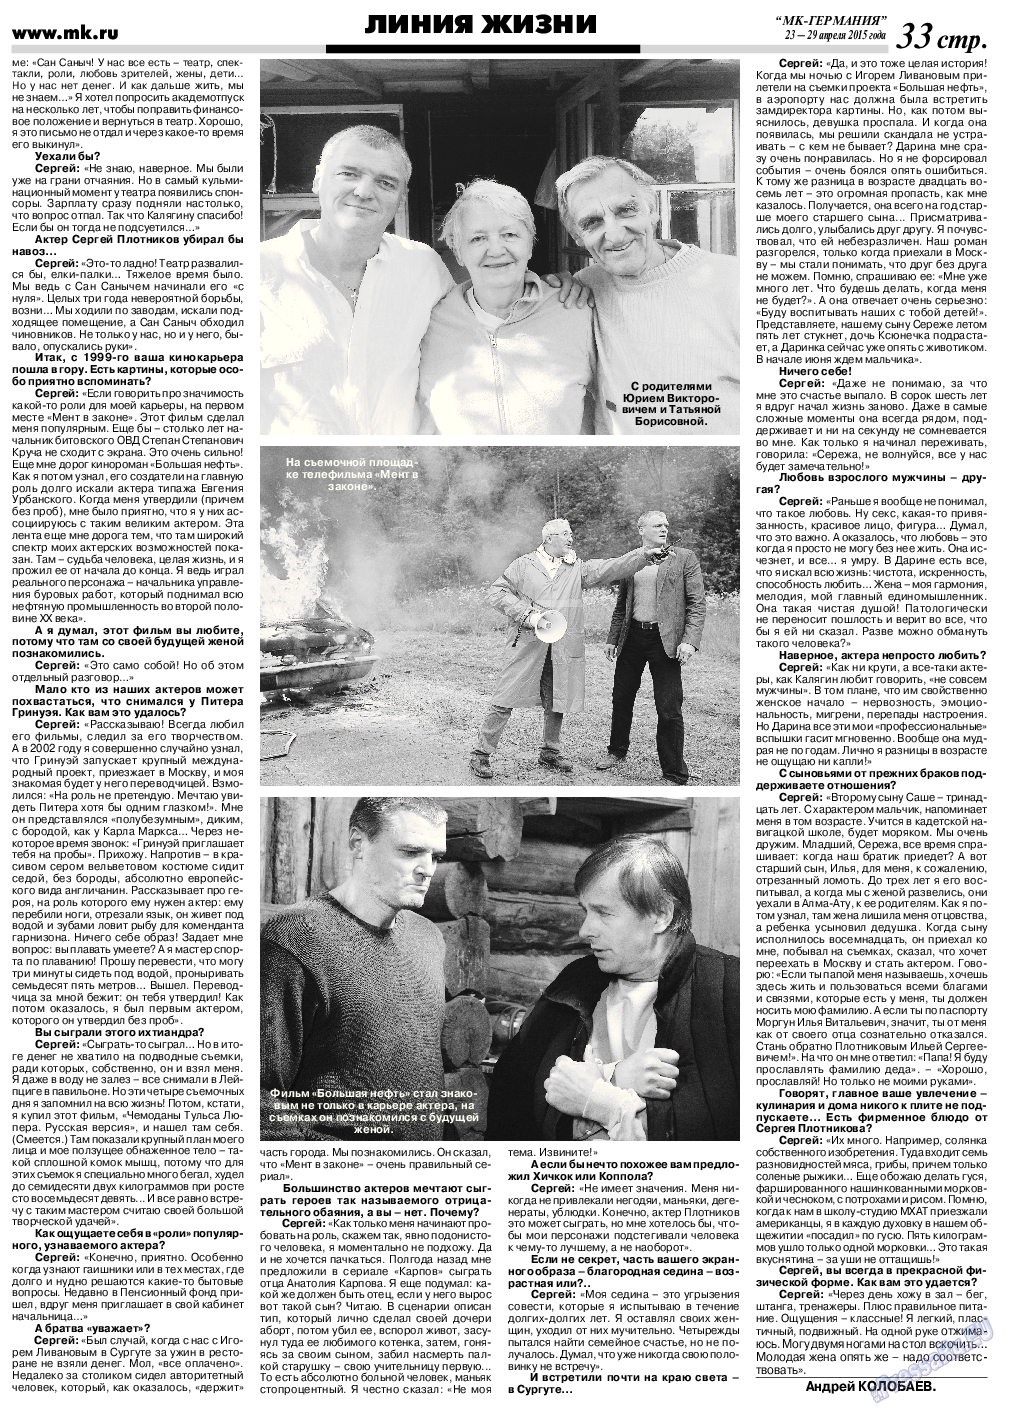 МК-Германия, газета. 2015 №17 стр.33